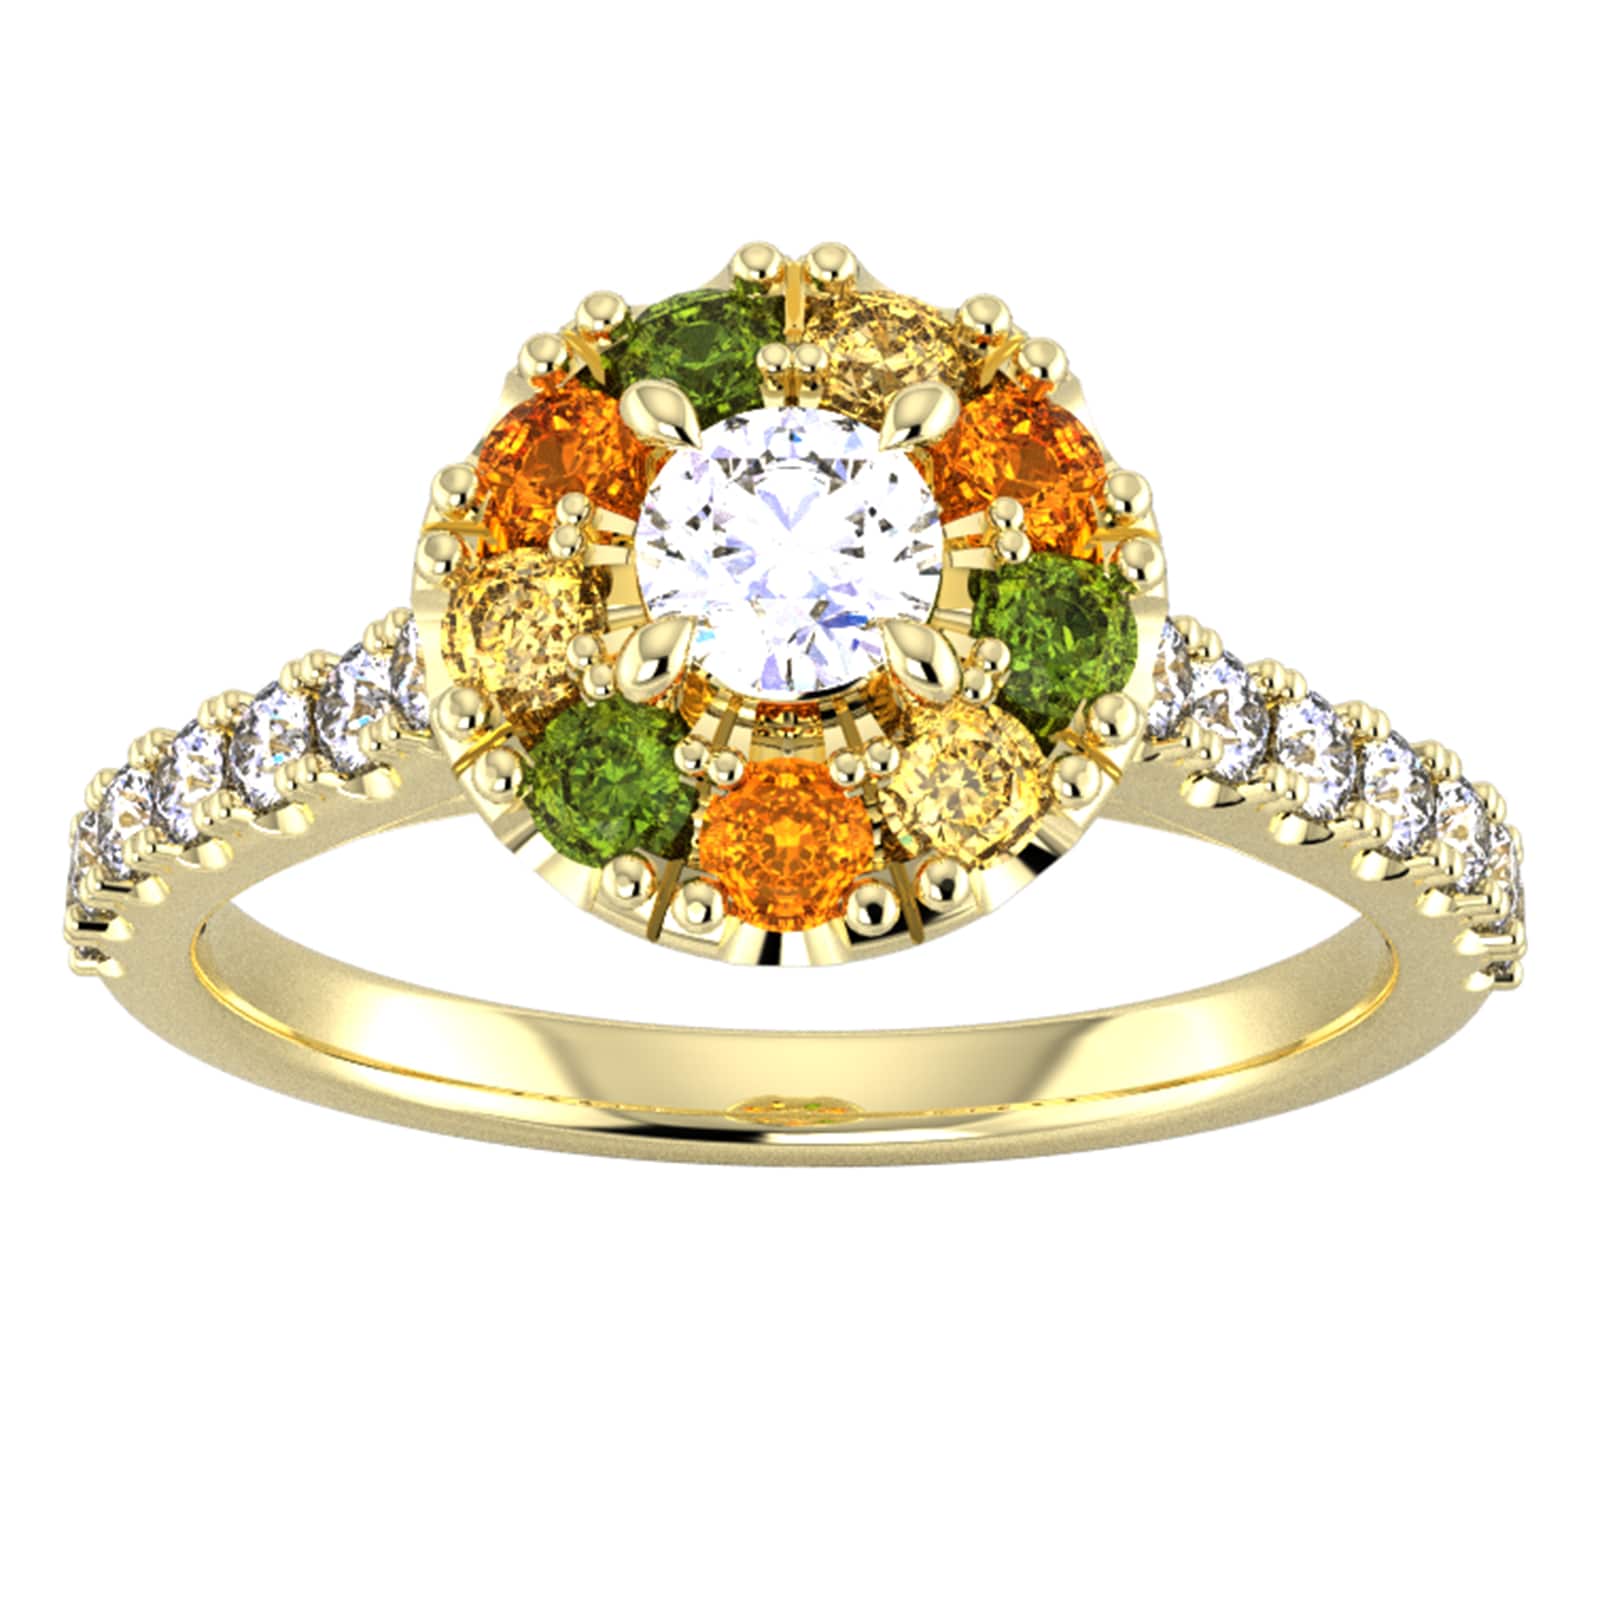 18ct Yellow Gold Diamond & Yellow, Orange, Green Sapphire Halo Ring - Ring Size O.5